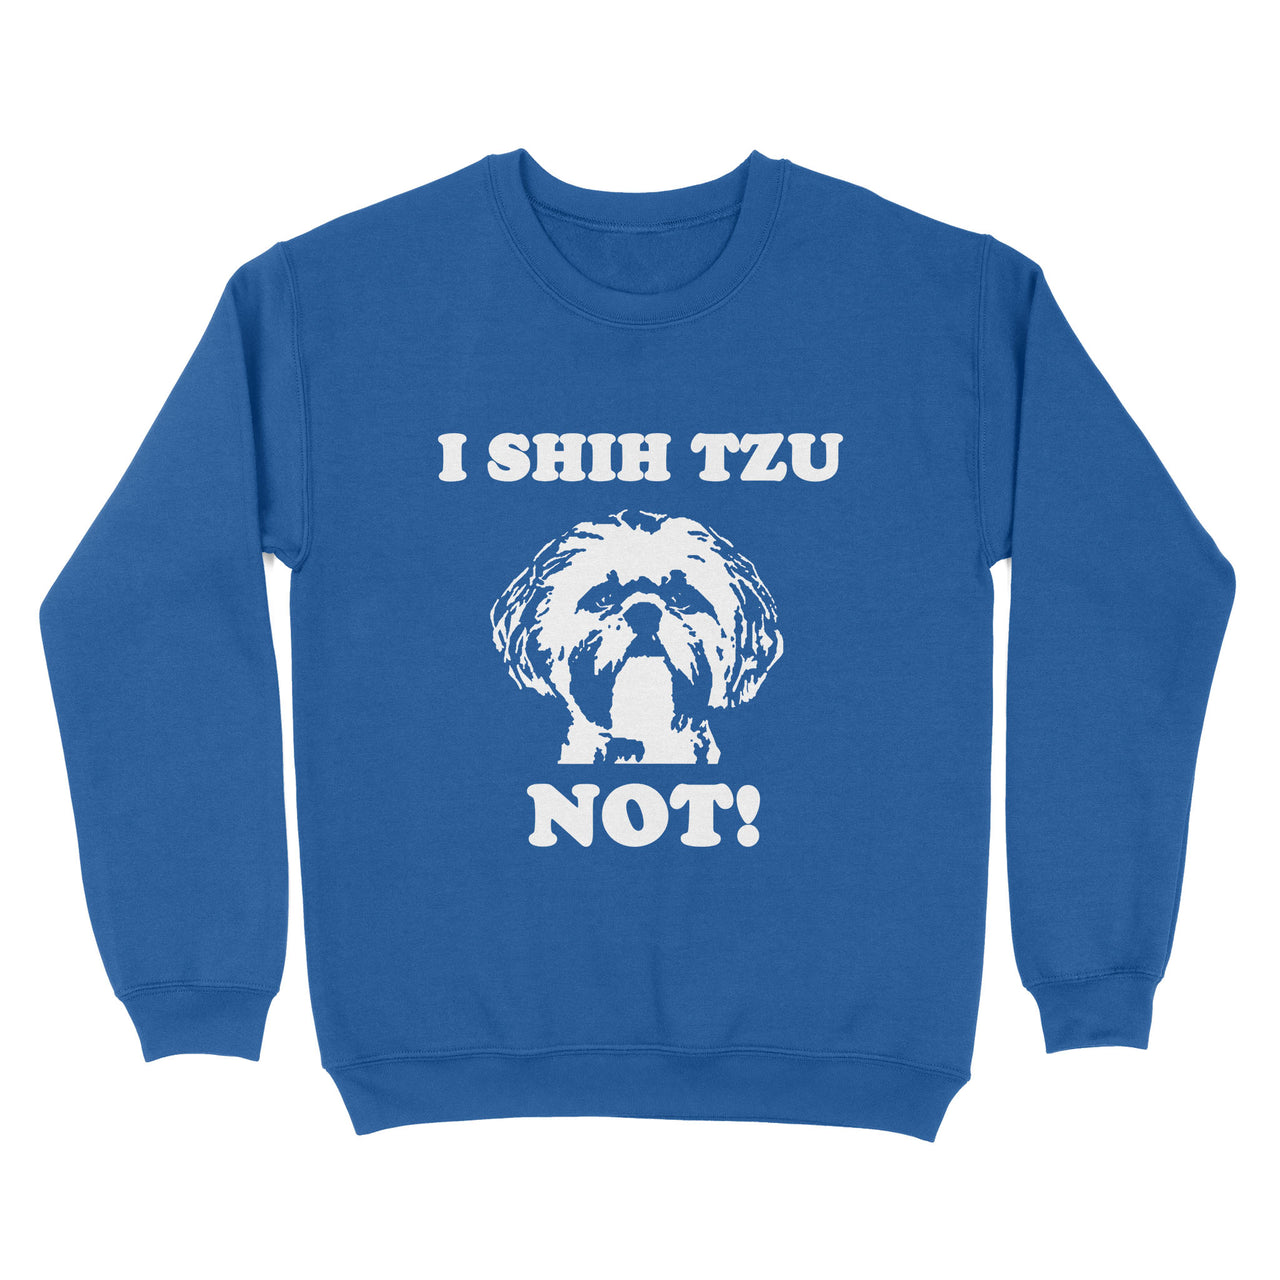 Gift Idea For Dog Lover - I Shih Tzu Not - Standard Crew Neck Sweatshirt